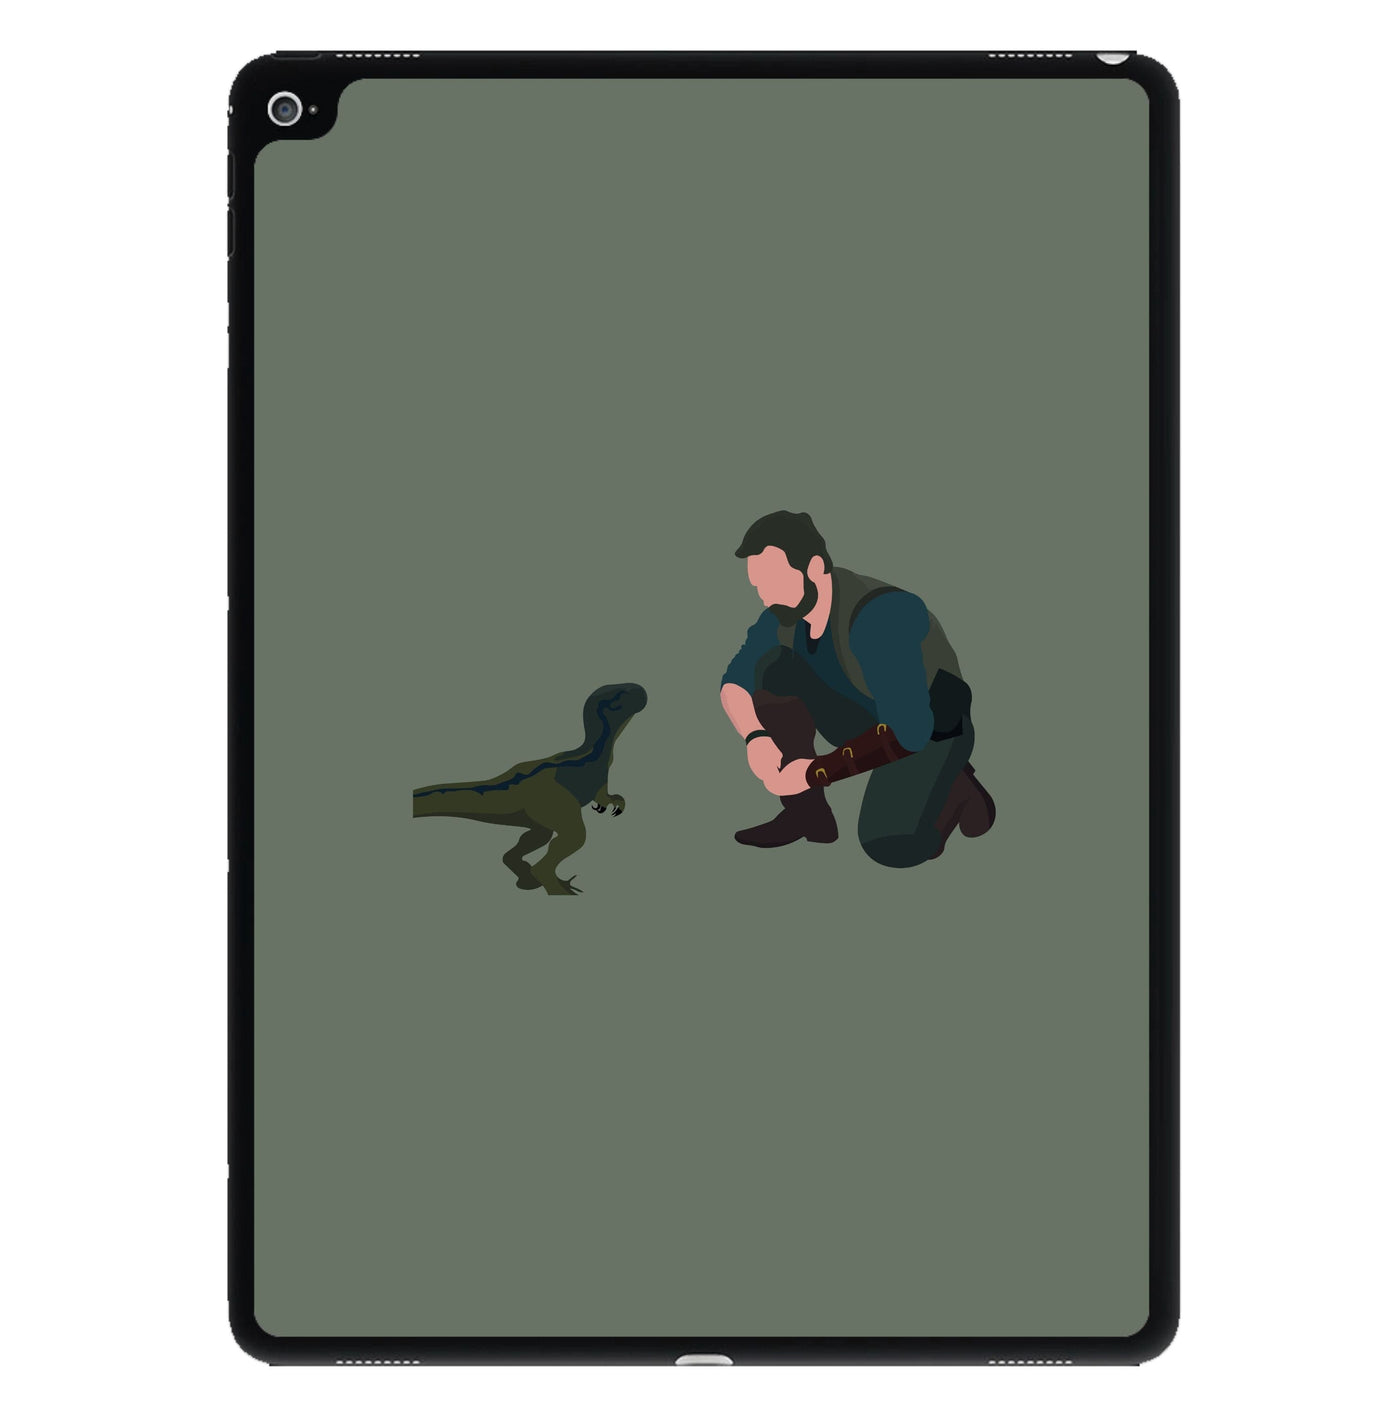 Owen Grady - Jurassic Park iPad Case